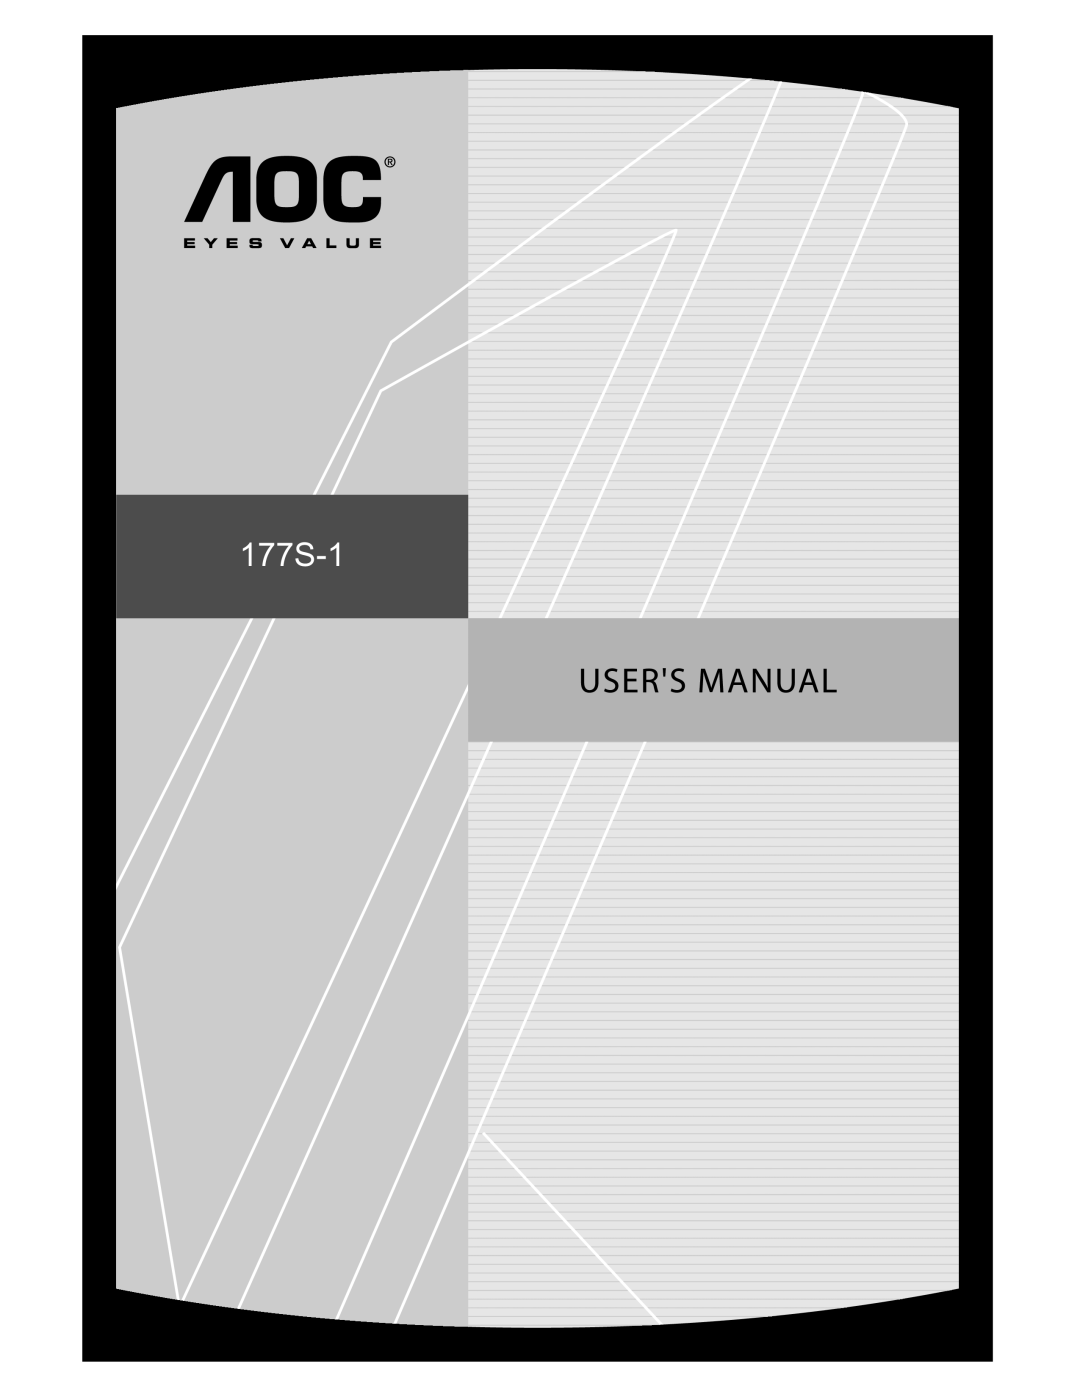 AOC manual 177S-1 